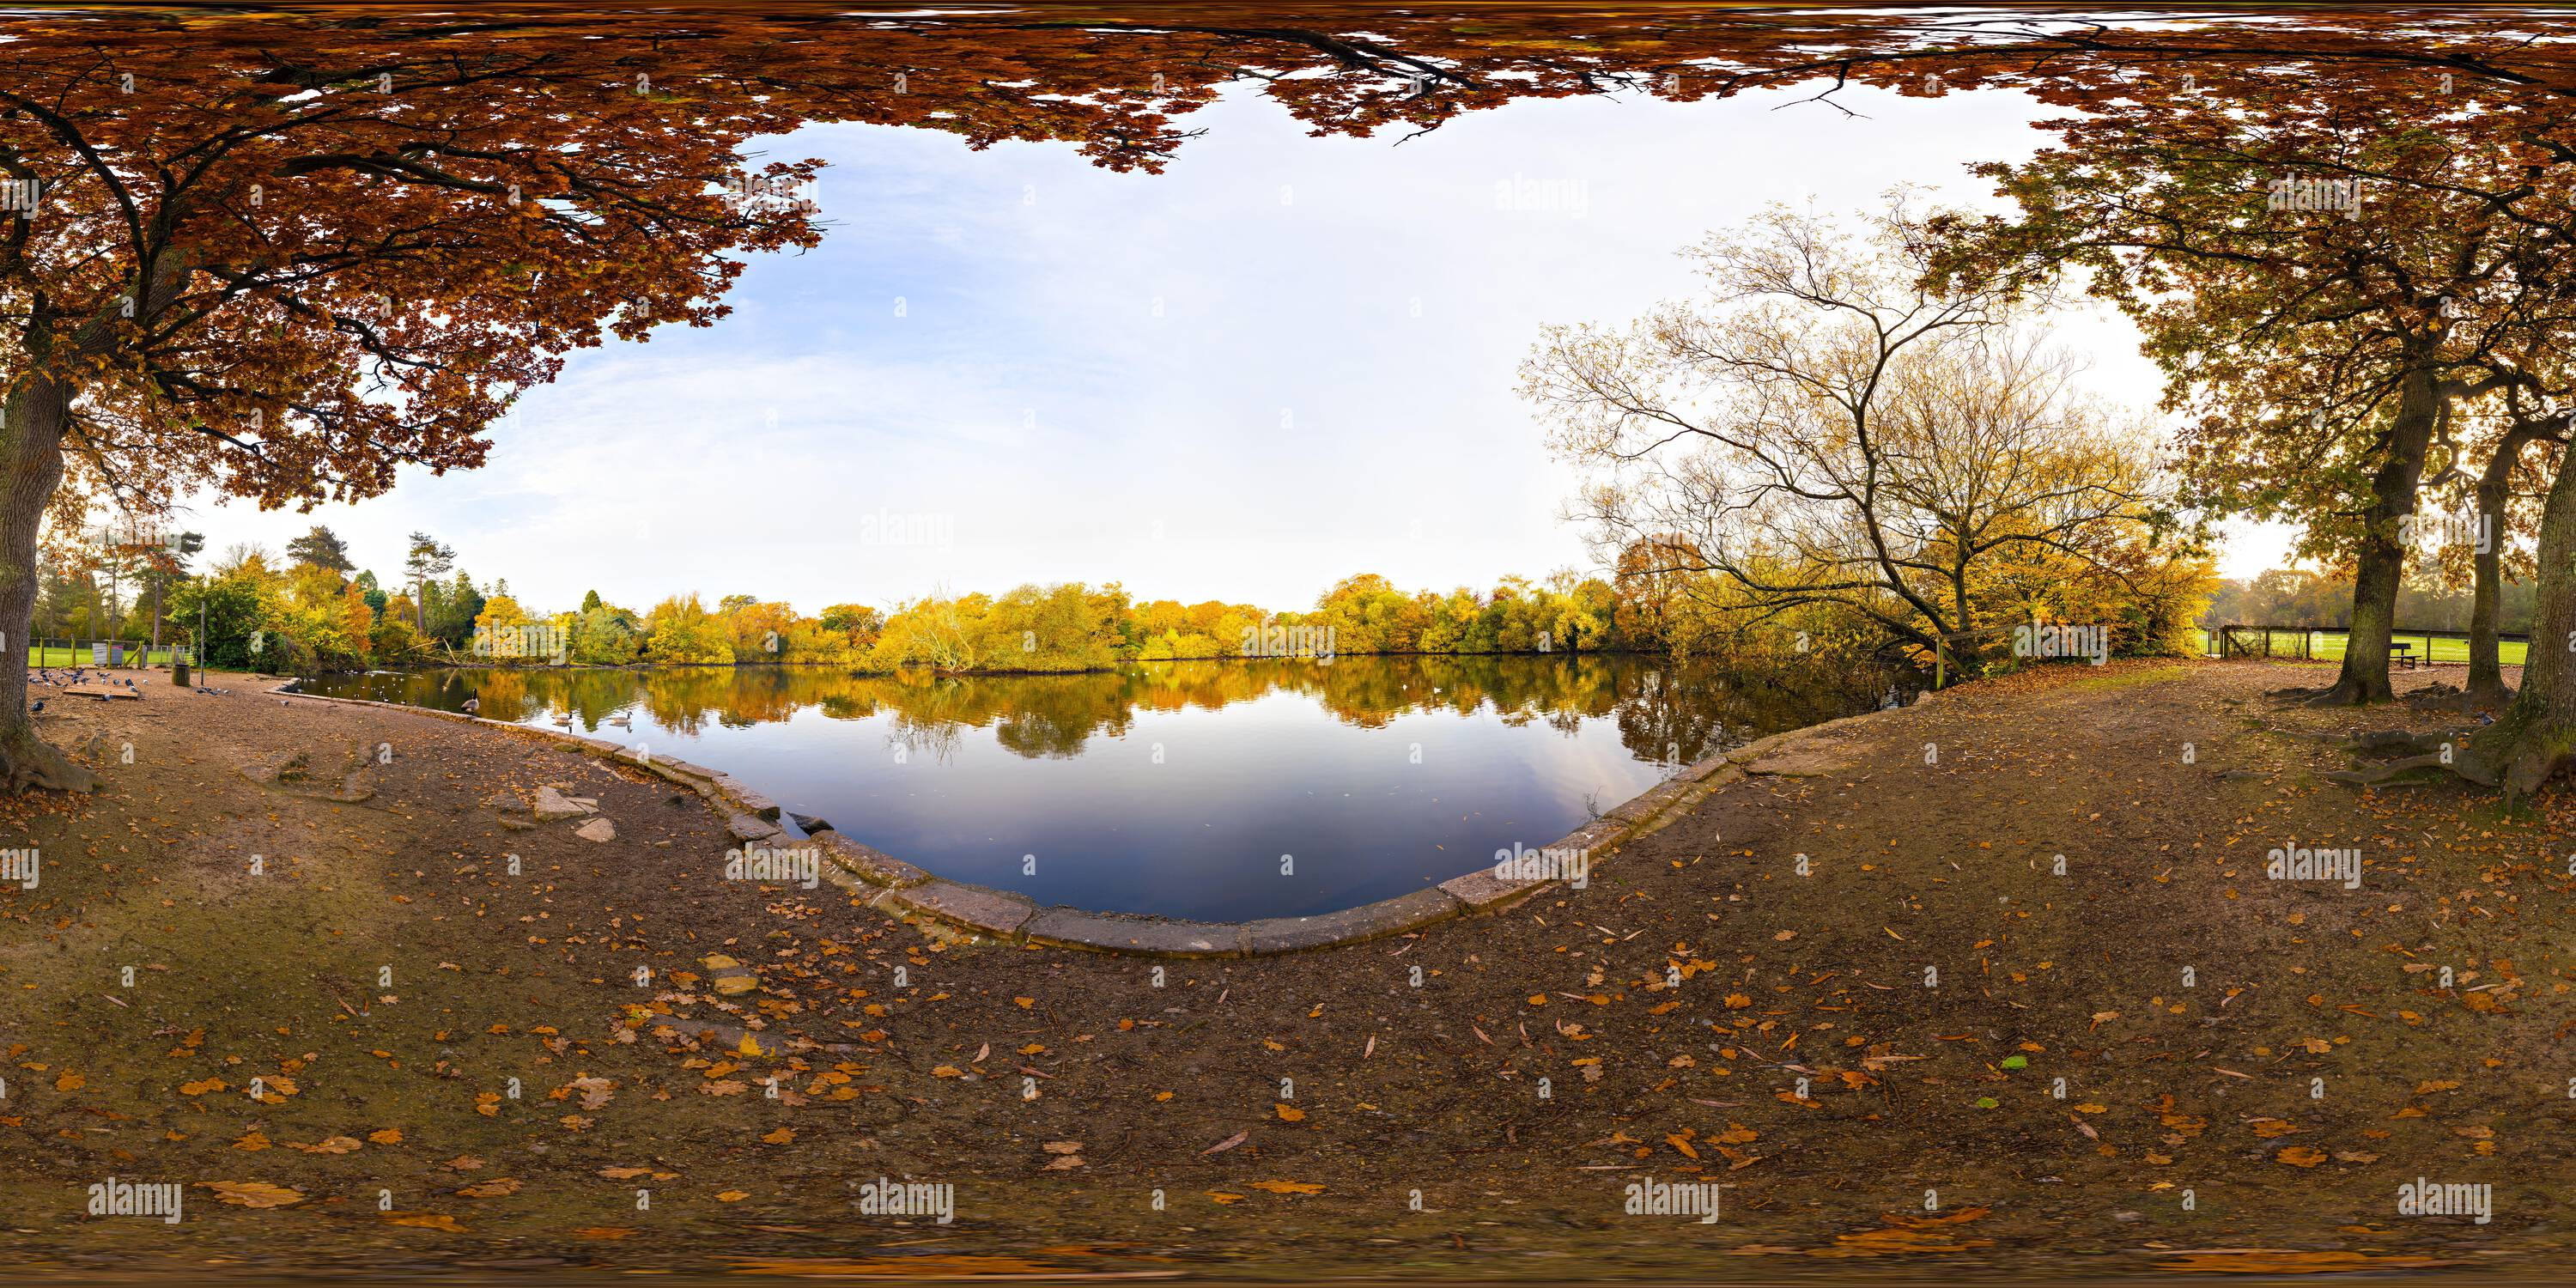 360 degree panoramic view of The Cemetery Lake on Southampton Common in autumn. Southampton, England.